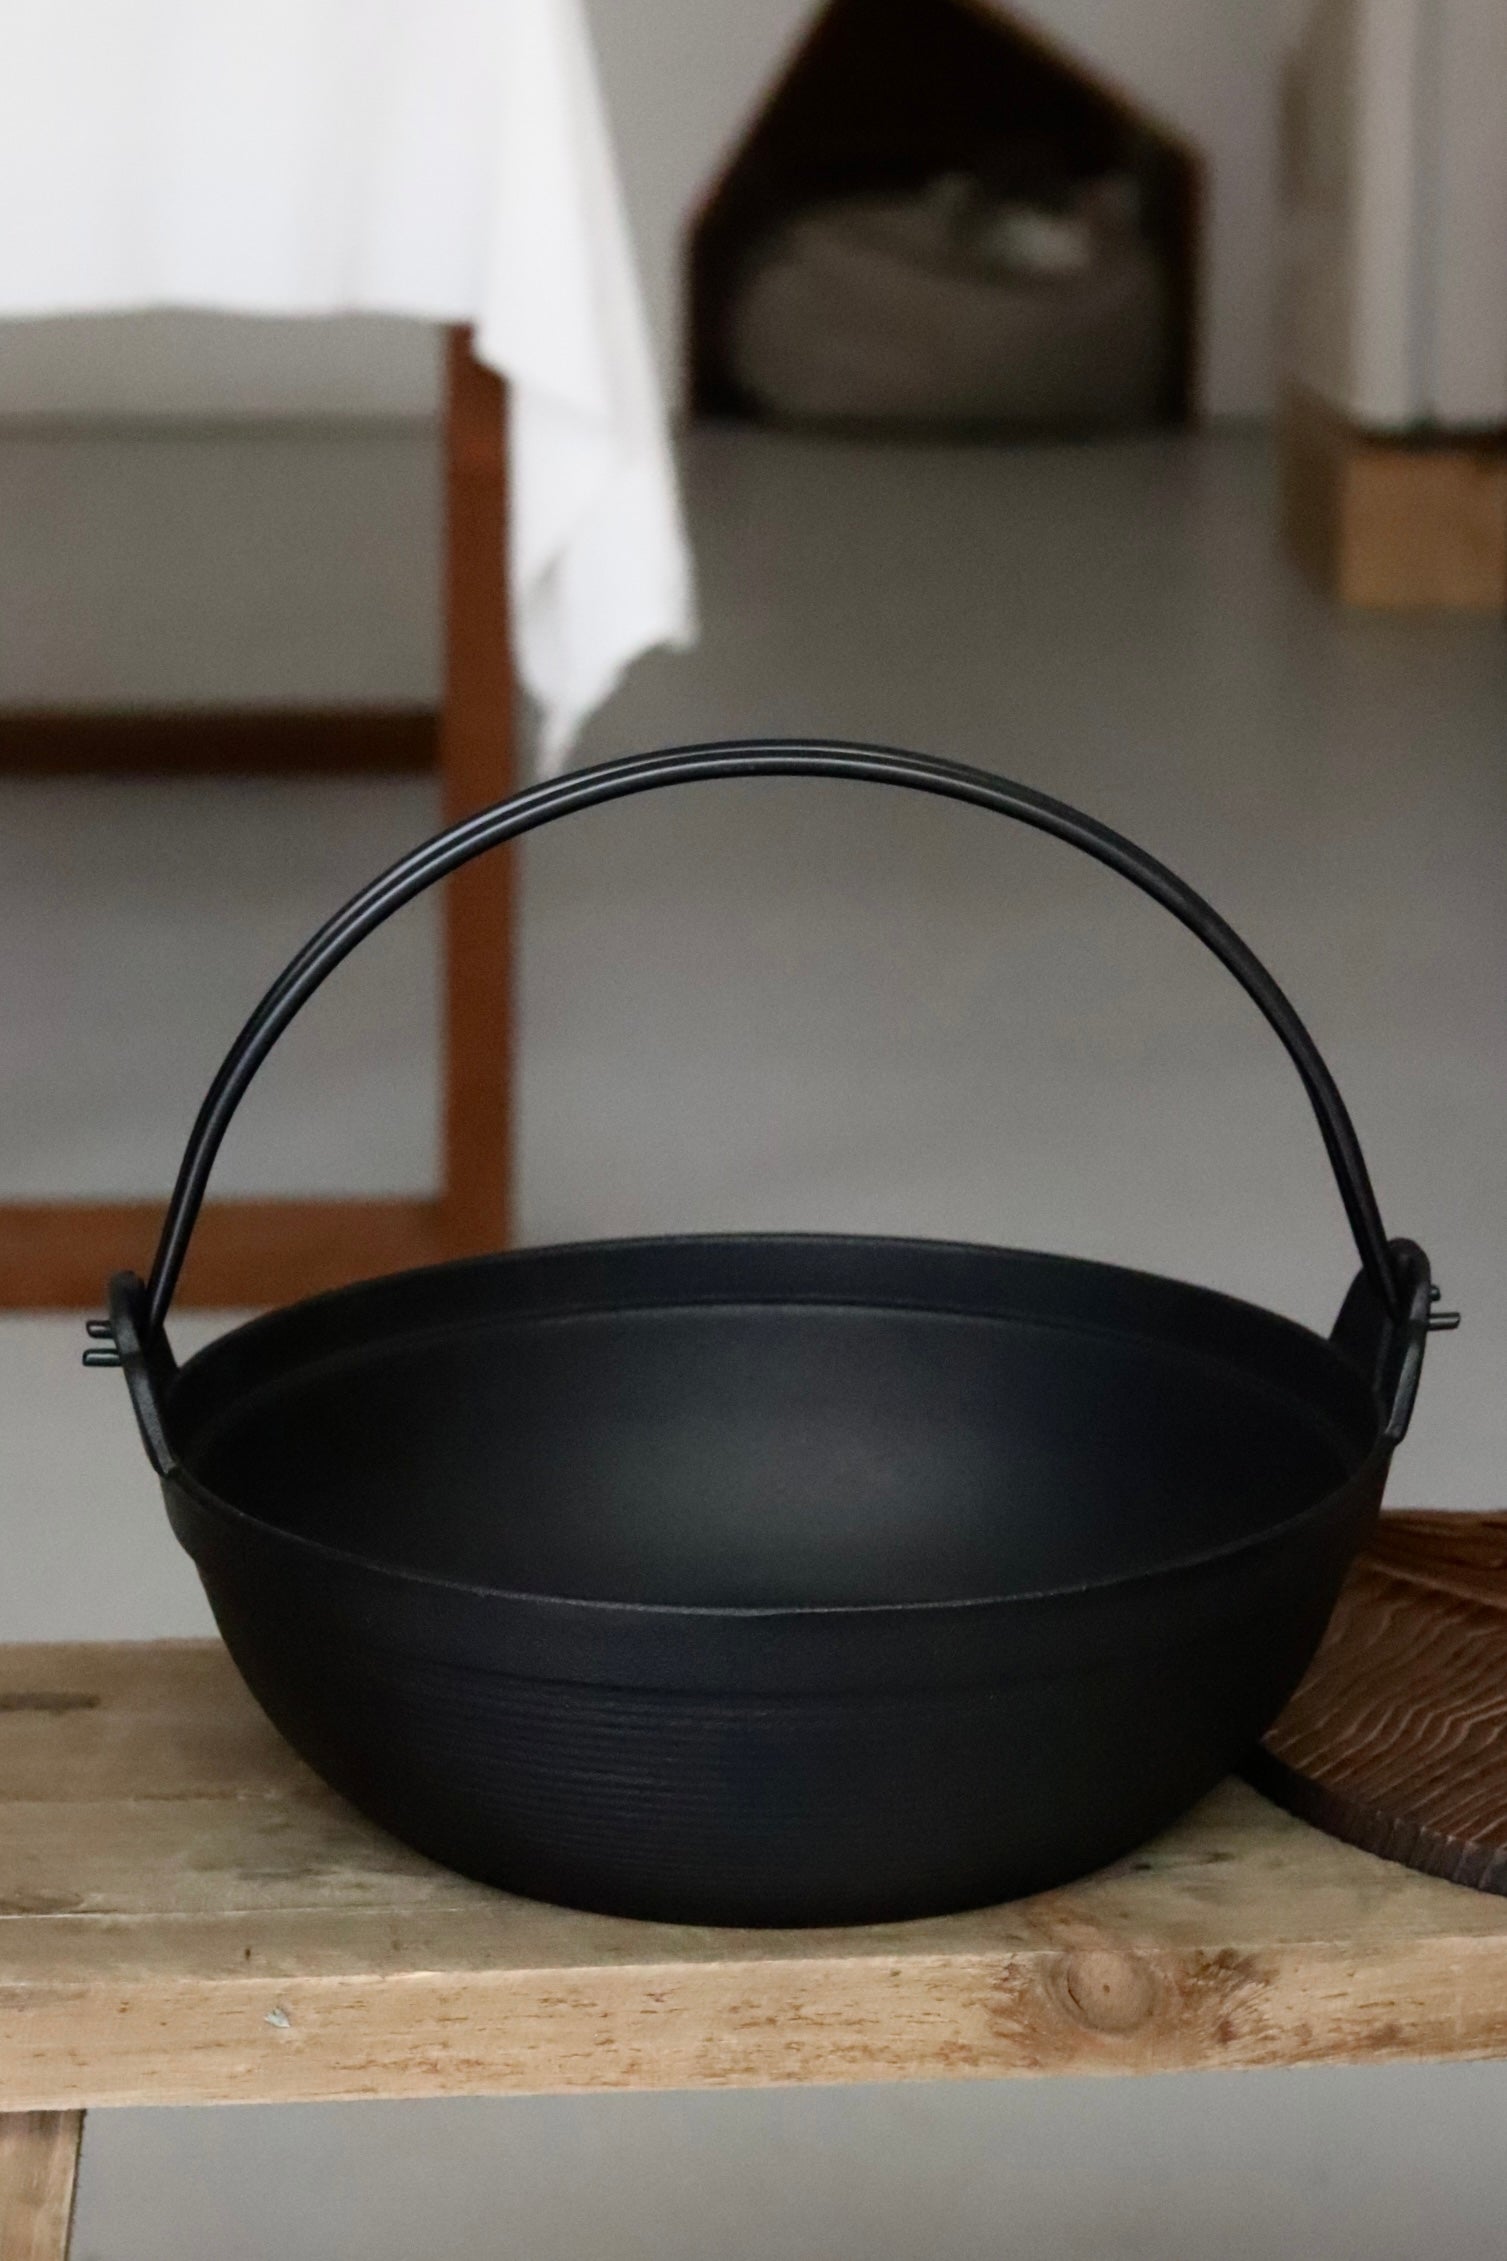 IWACHU Iron Cooking Pot